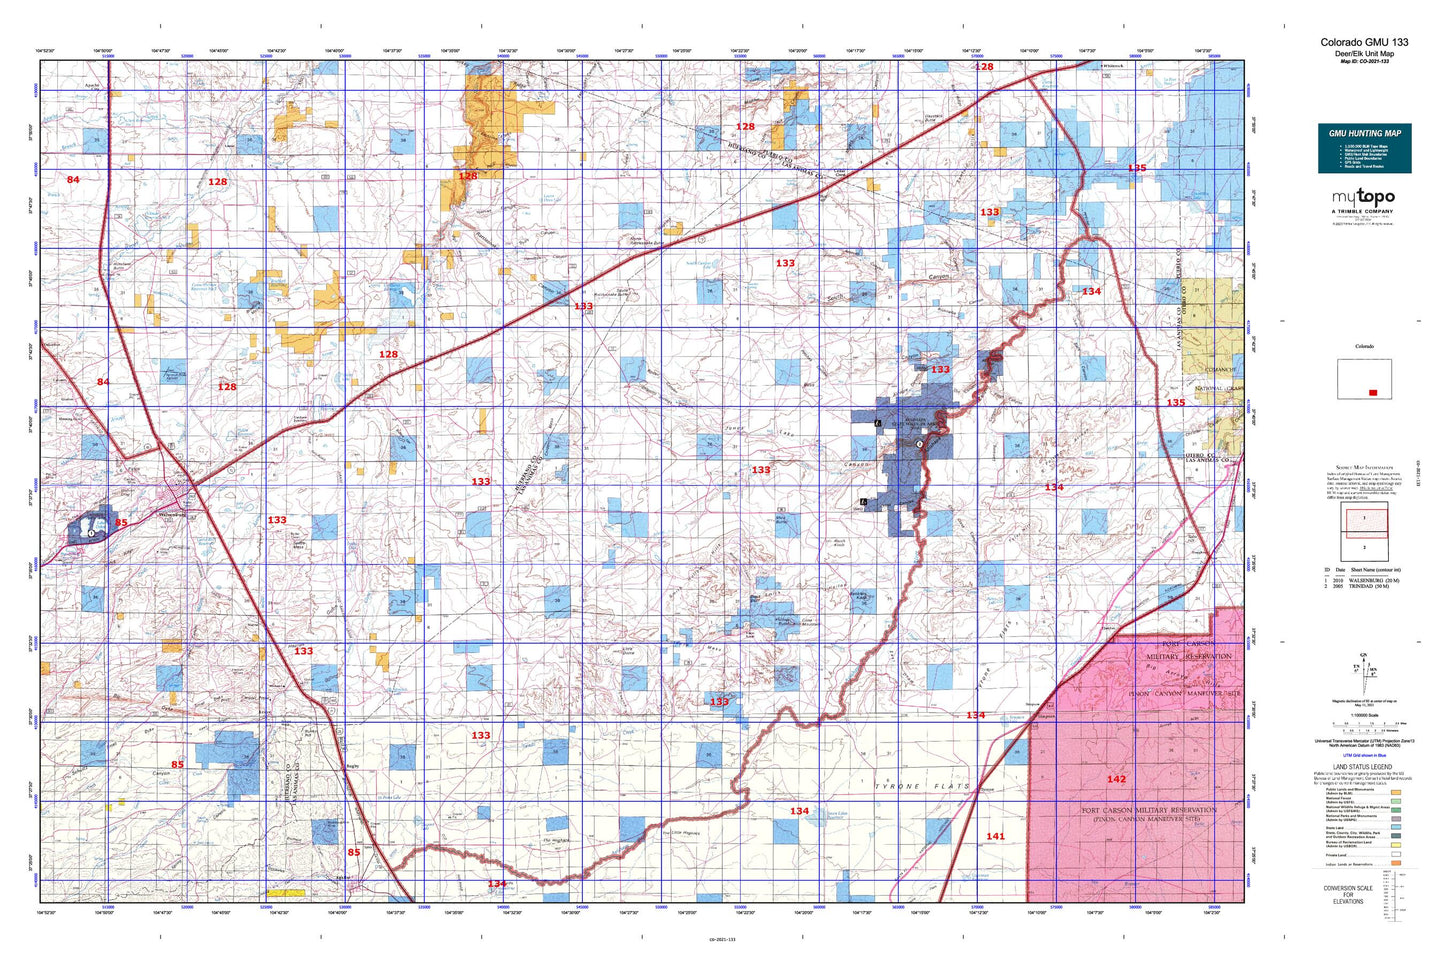 Colorado GMU 133 Map Image